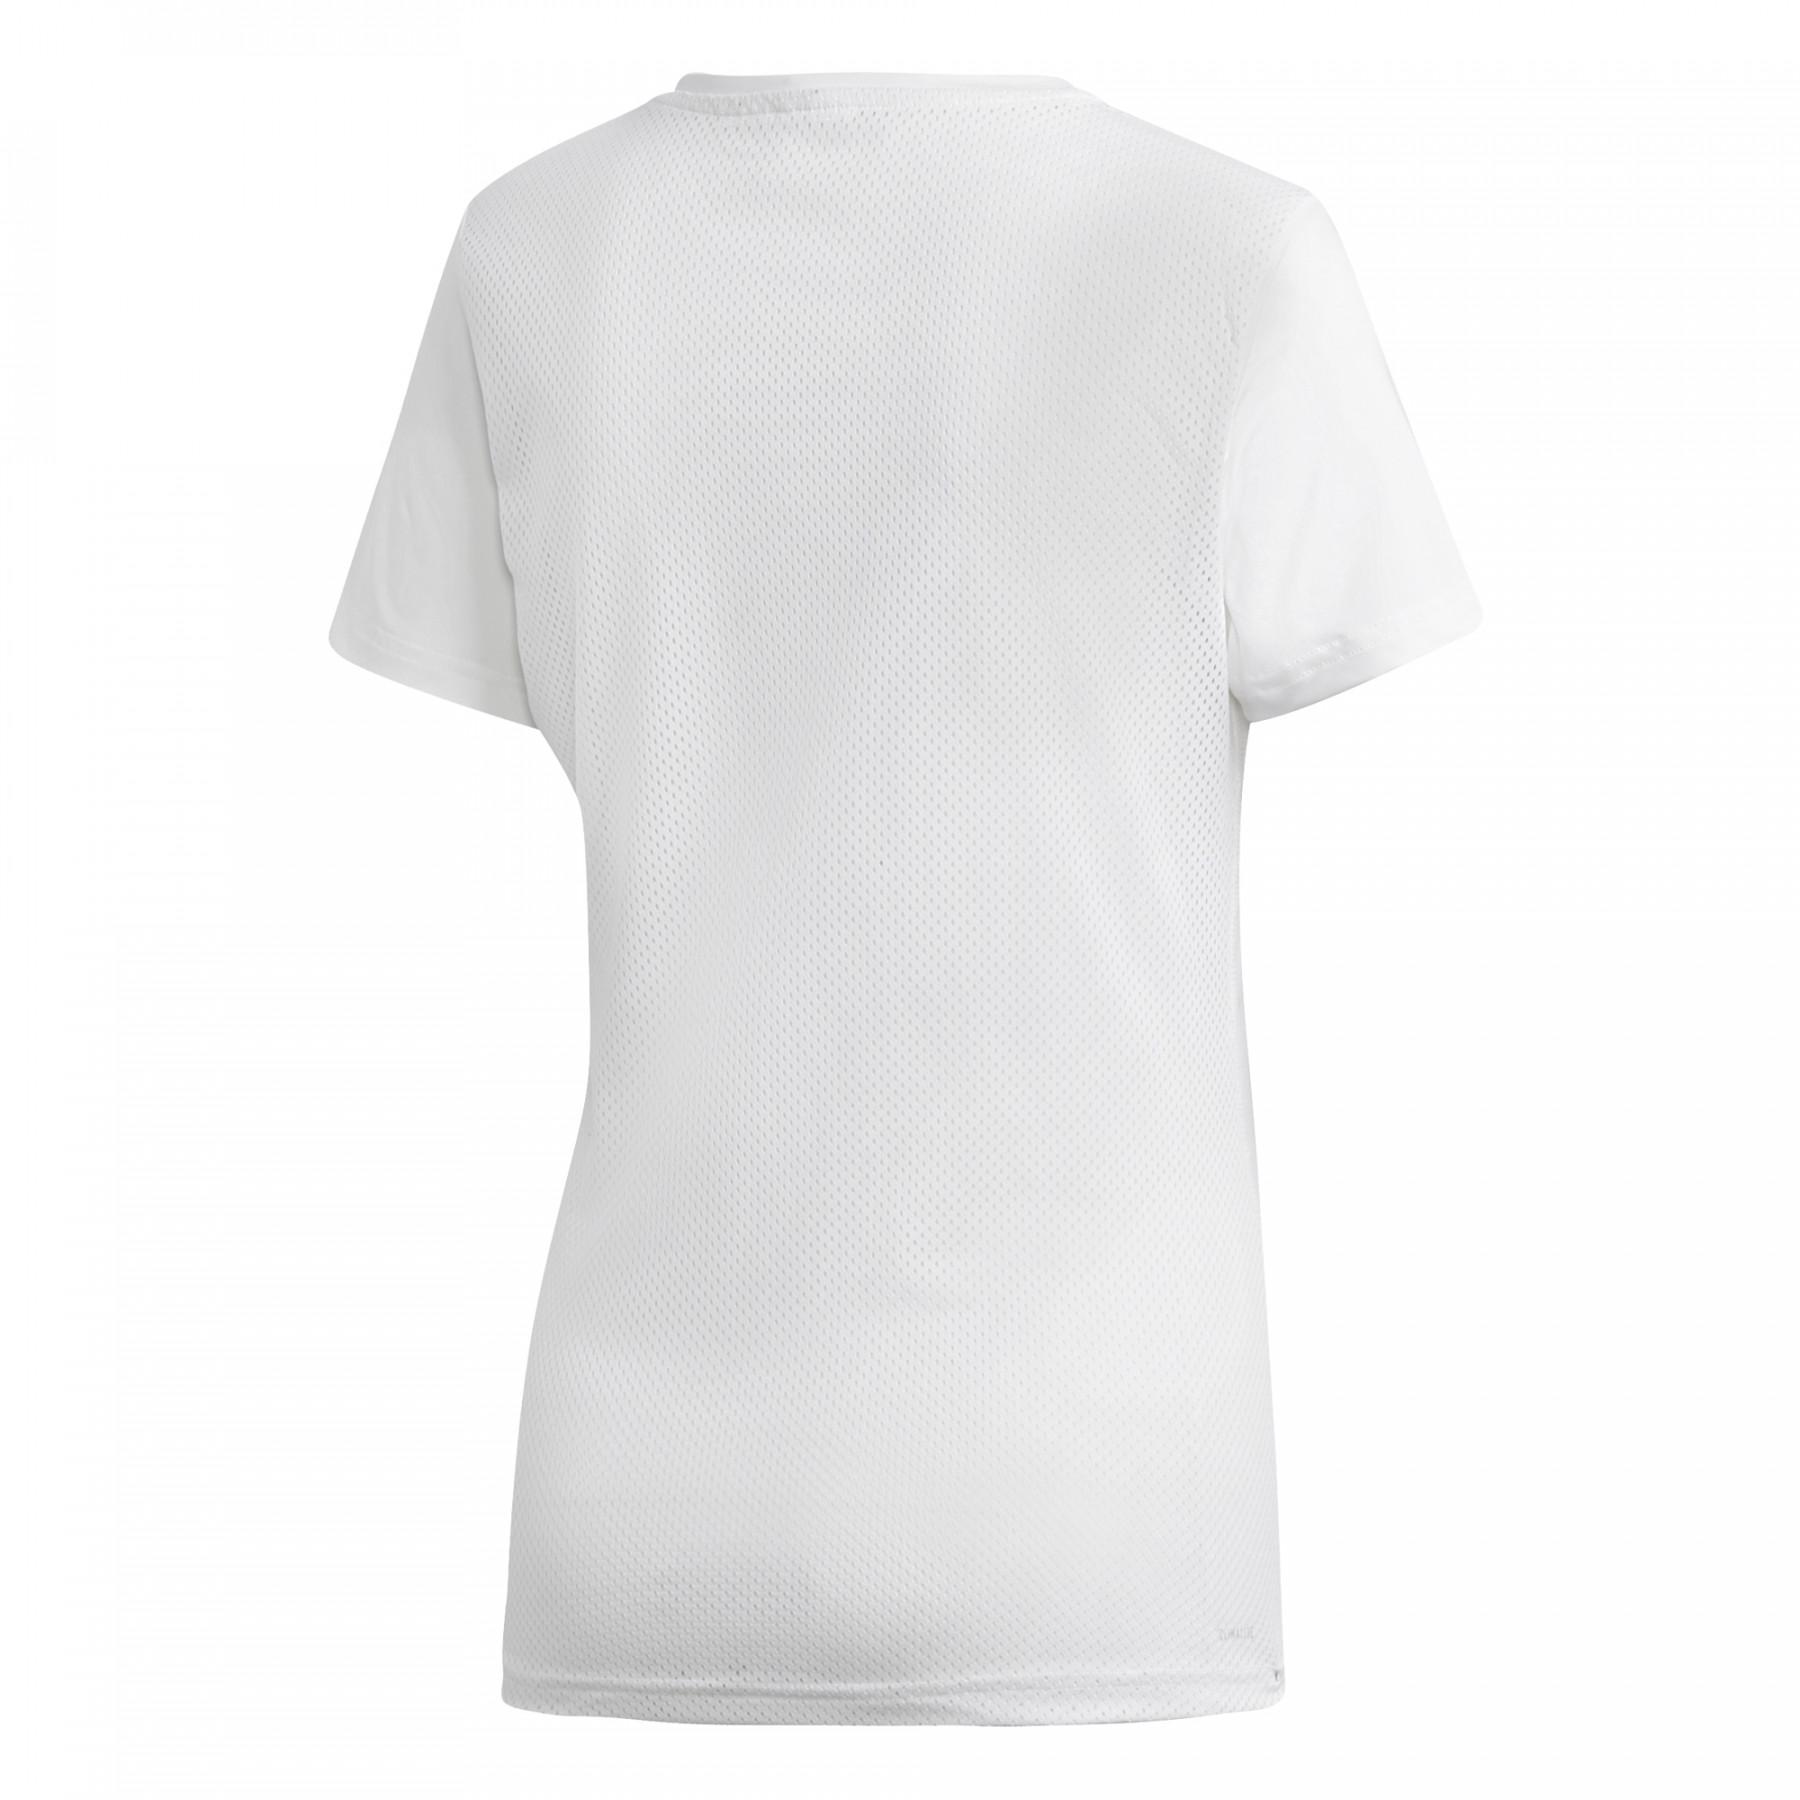 Koszulka damska adidas Design 2 Move Logo